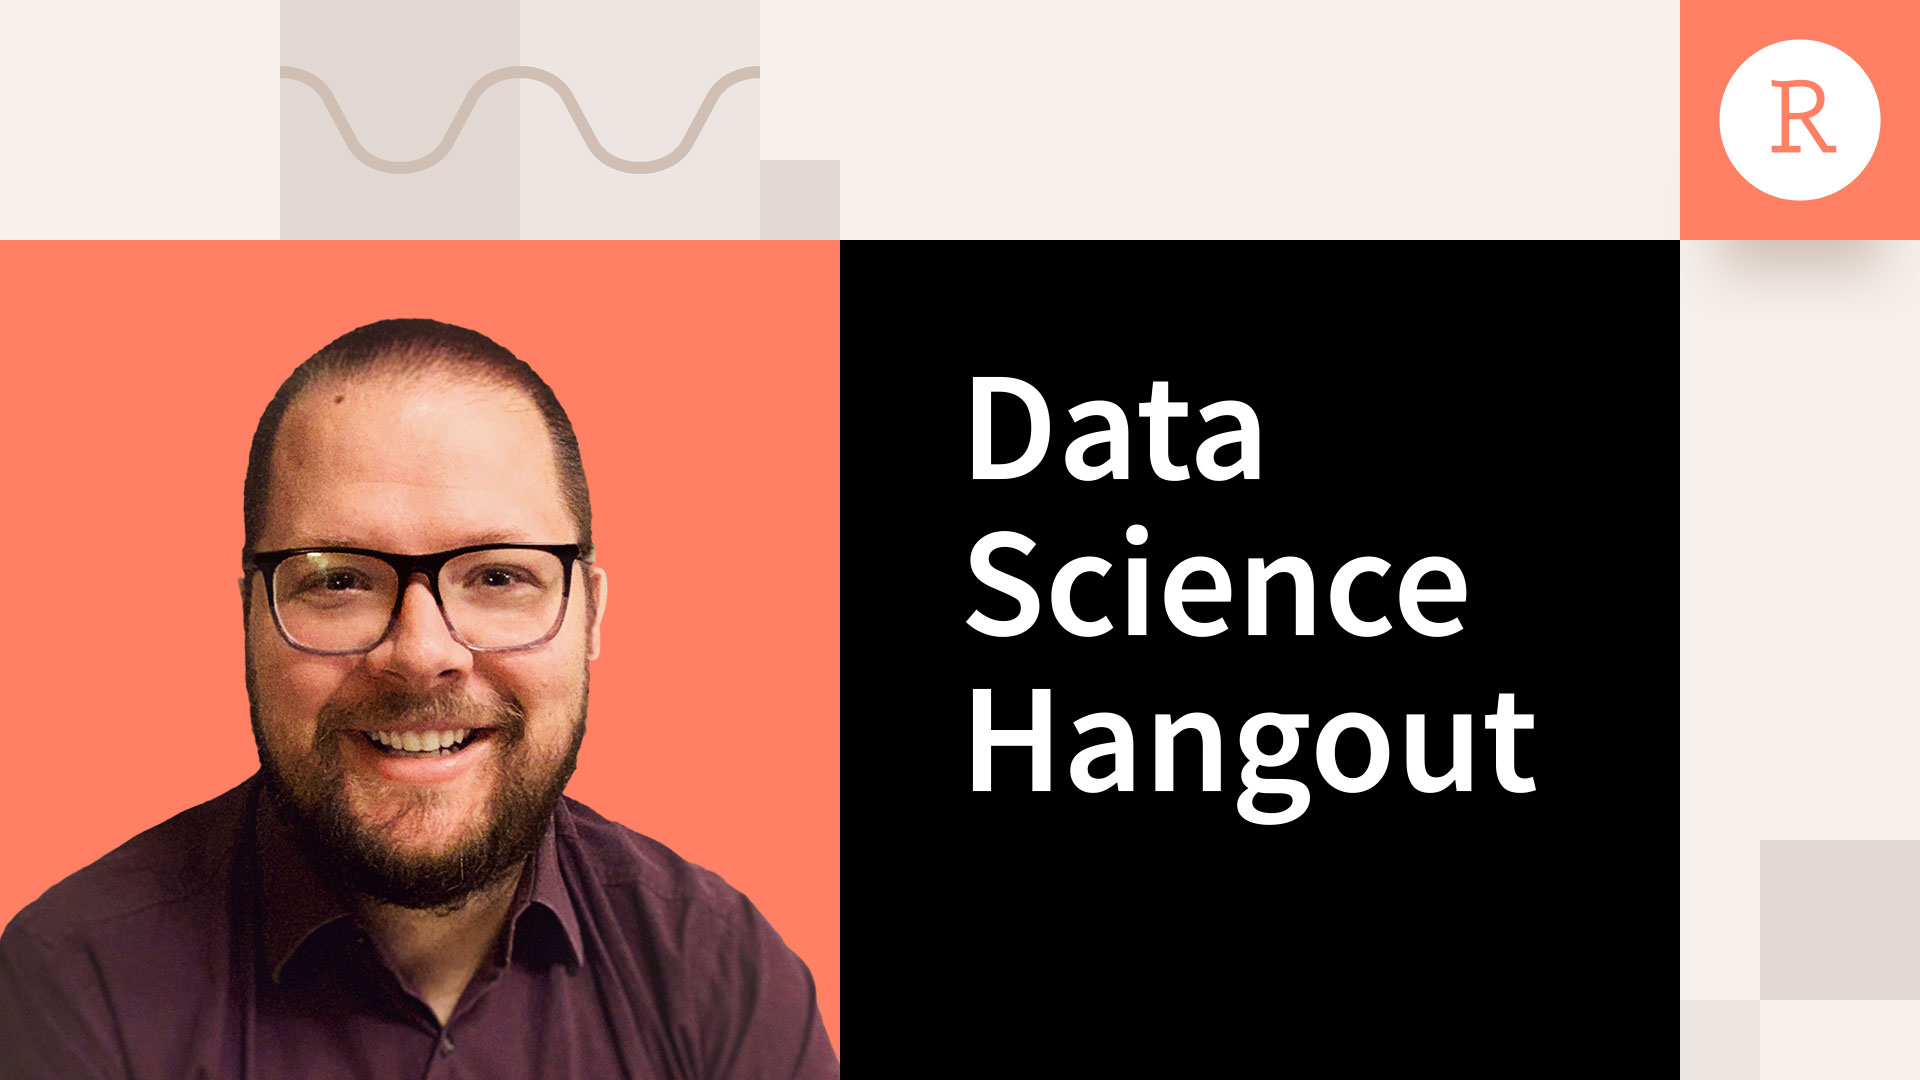 Data Science Hangout with Matthias Mueller